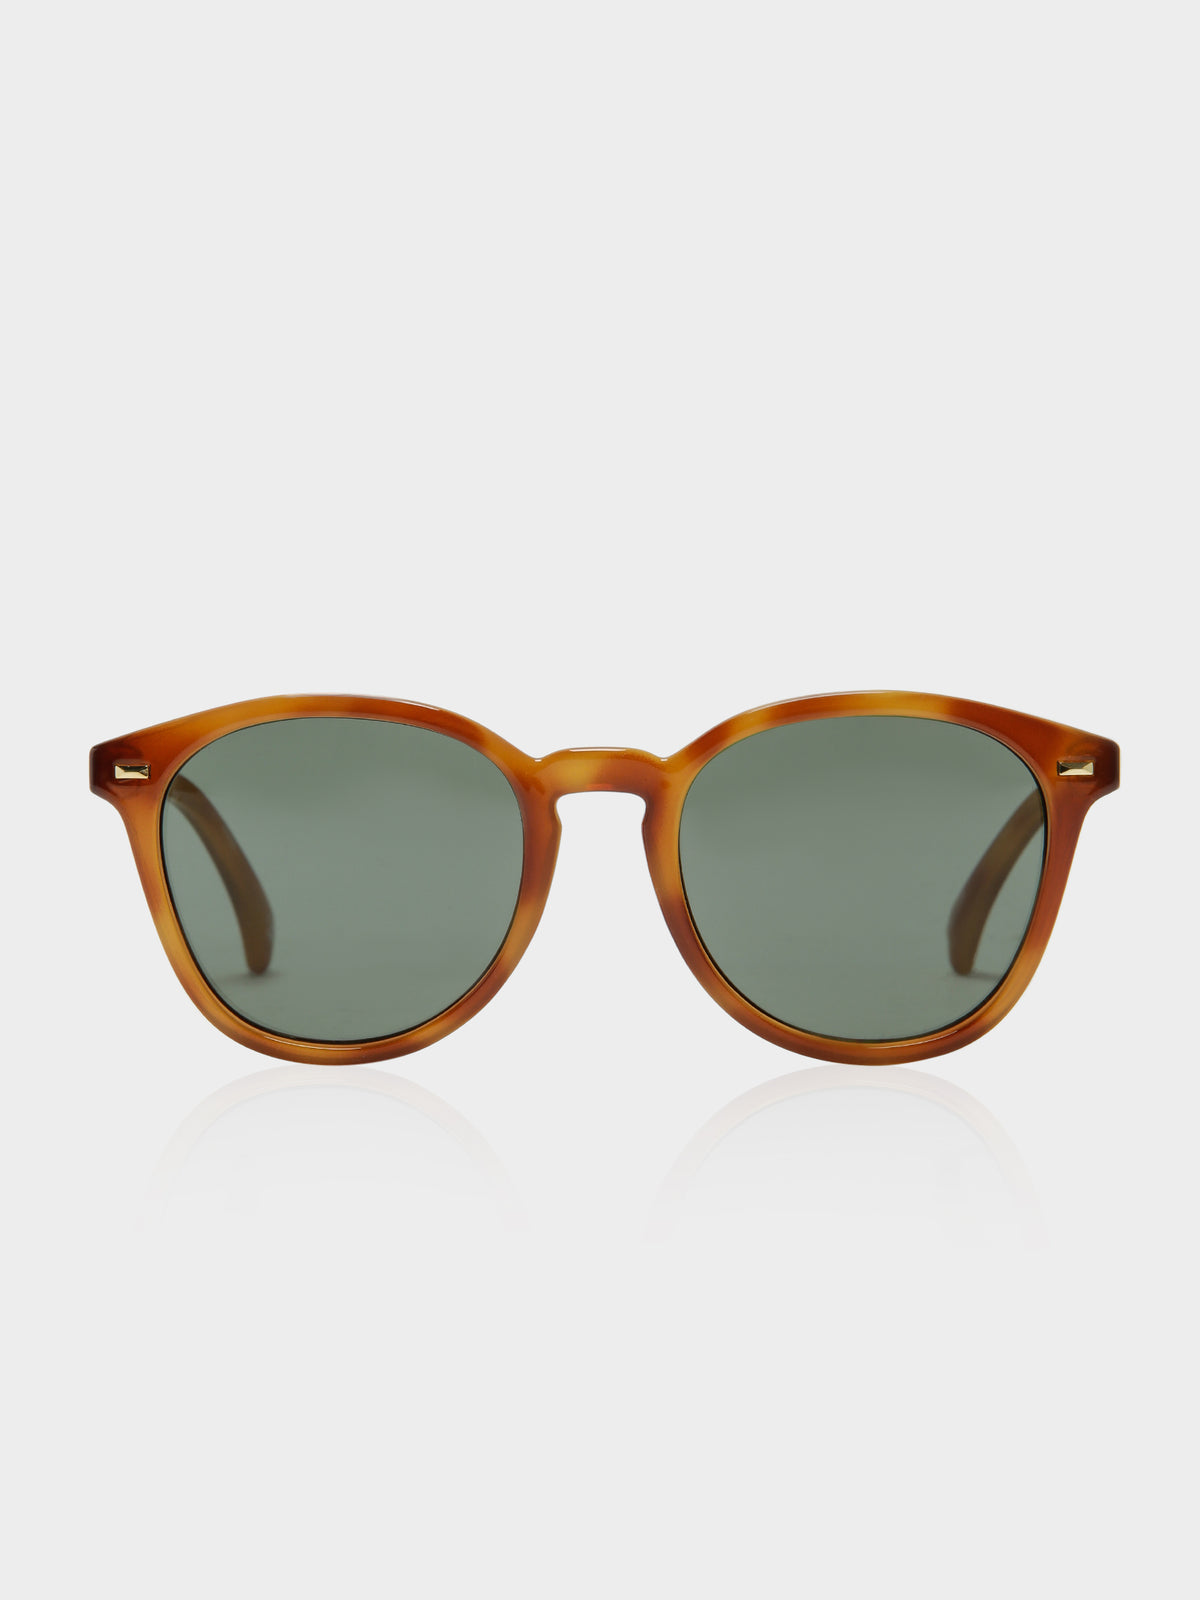 Bandwagon Vintage Sunglasses in Tortoiseshell